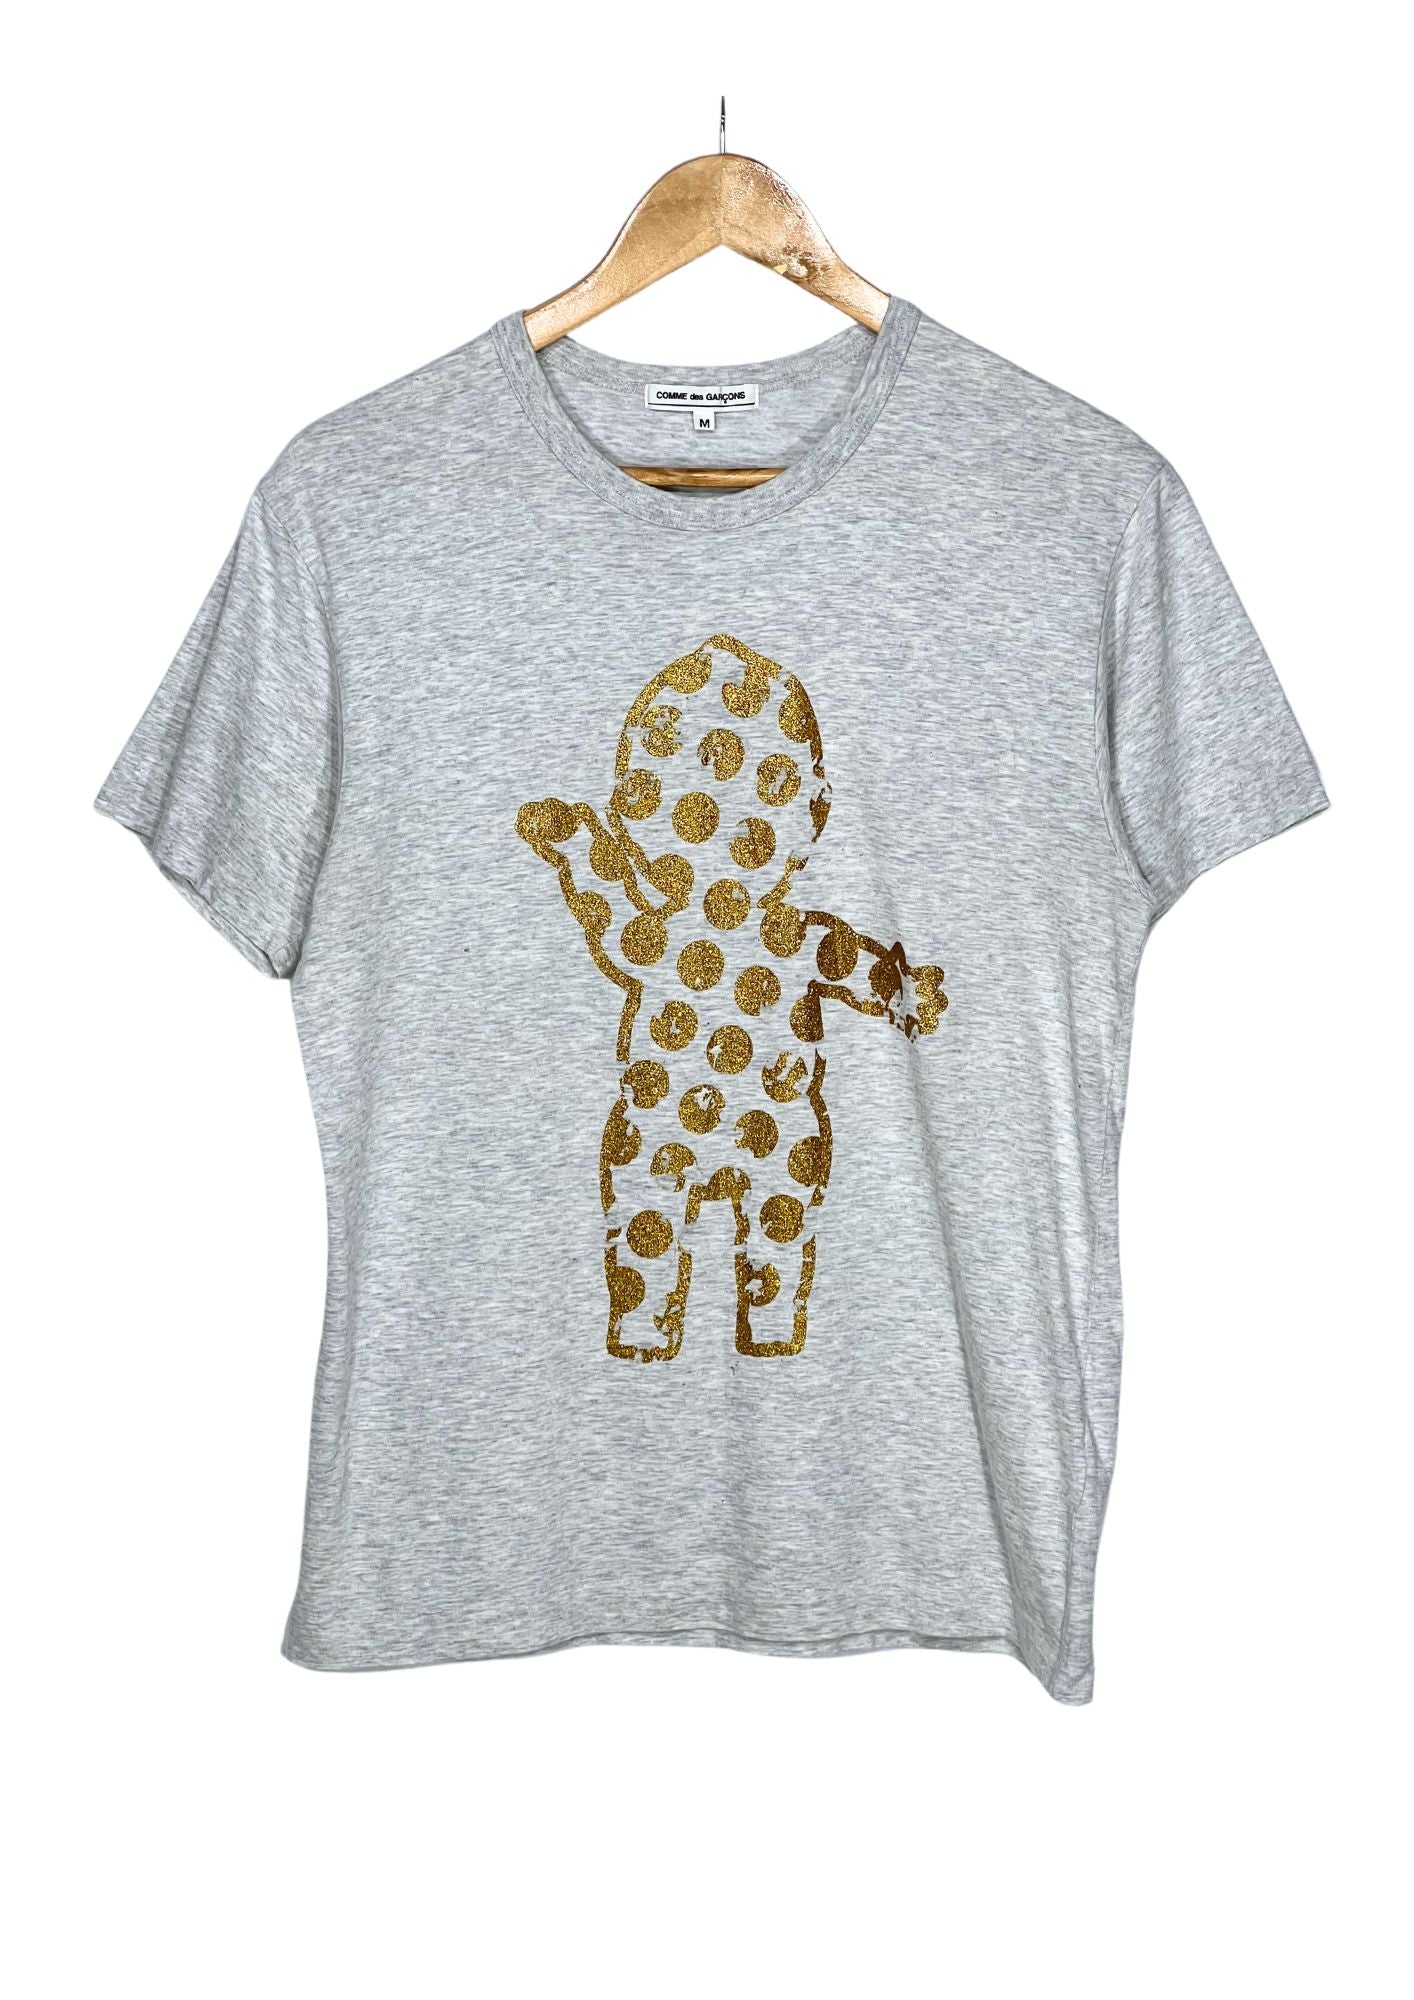 2014 COMME des GARÇONS Kewpie T-shirt